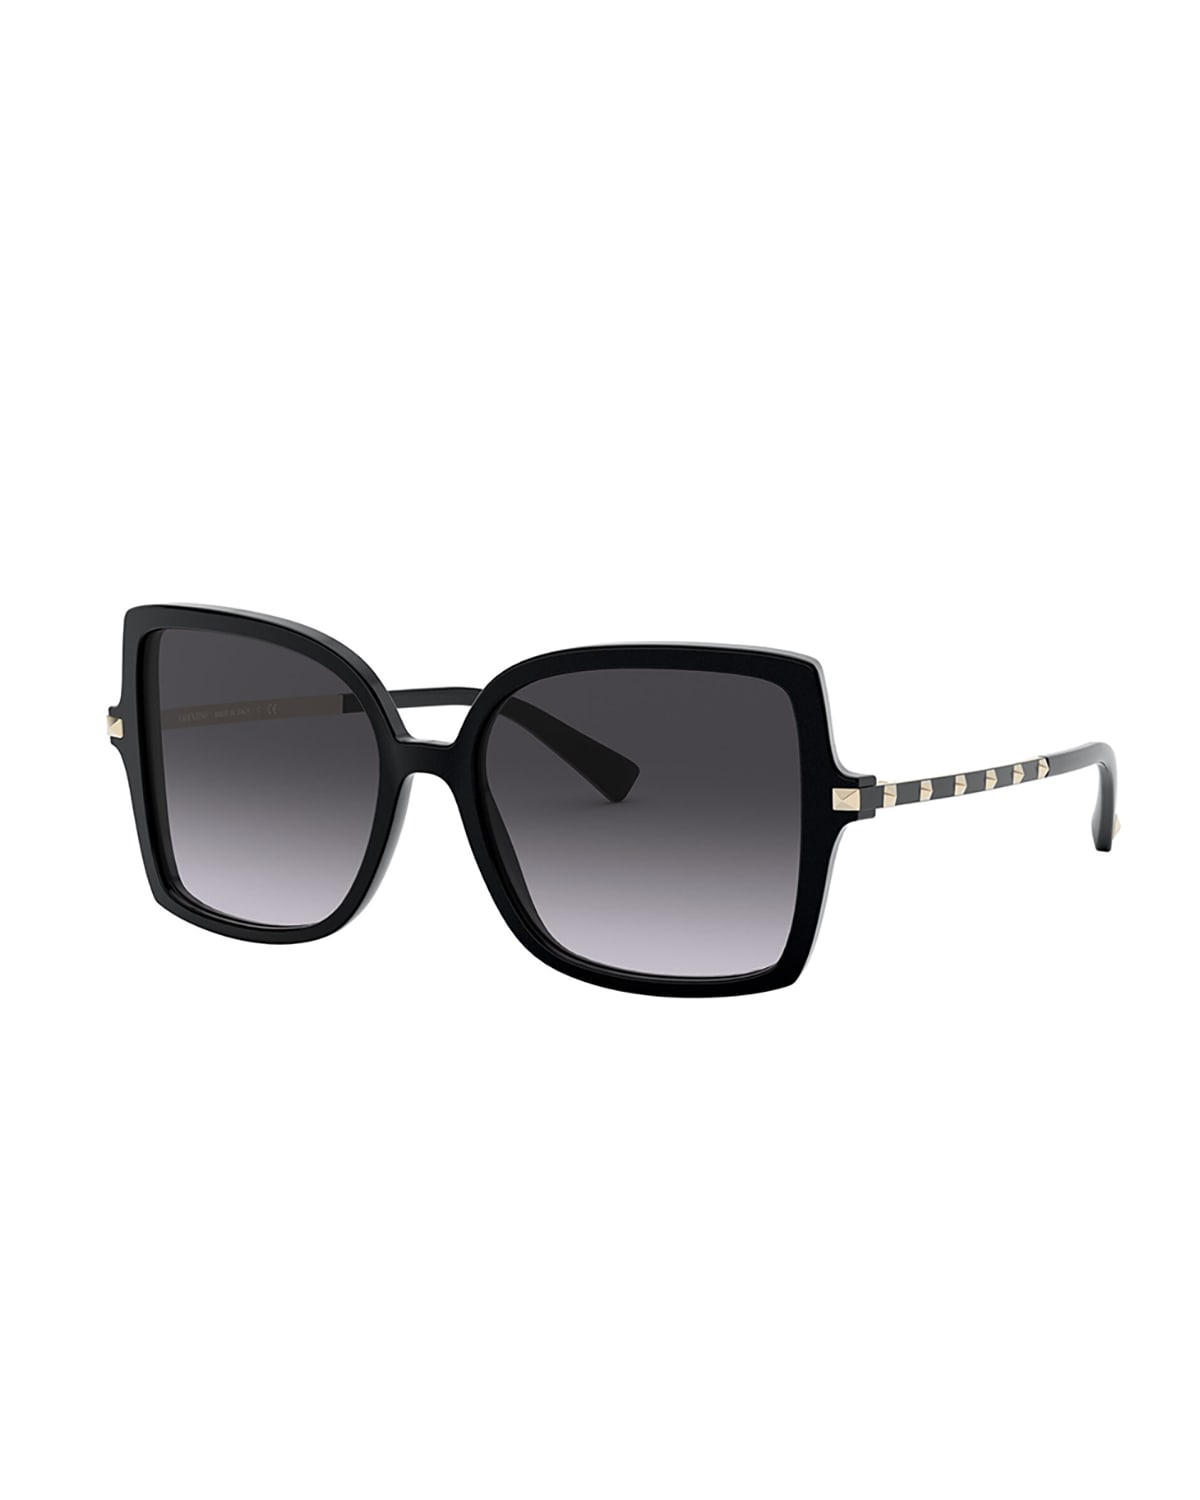 Valentino Square Acetate Sunglasses w/ Rockstud Arms